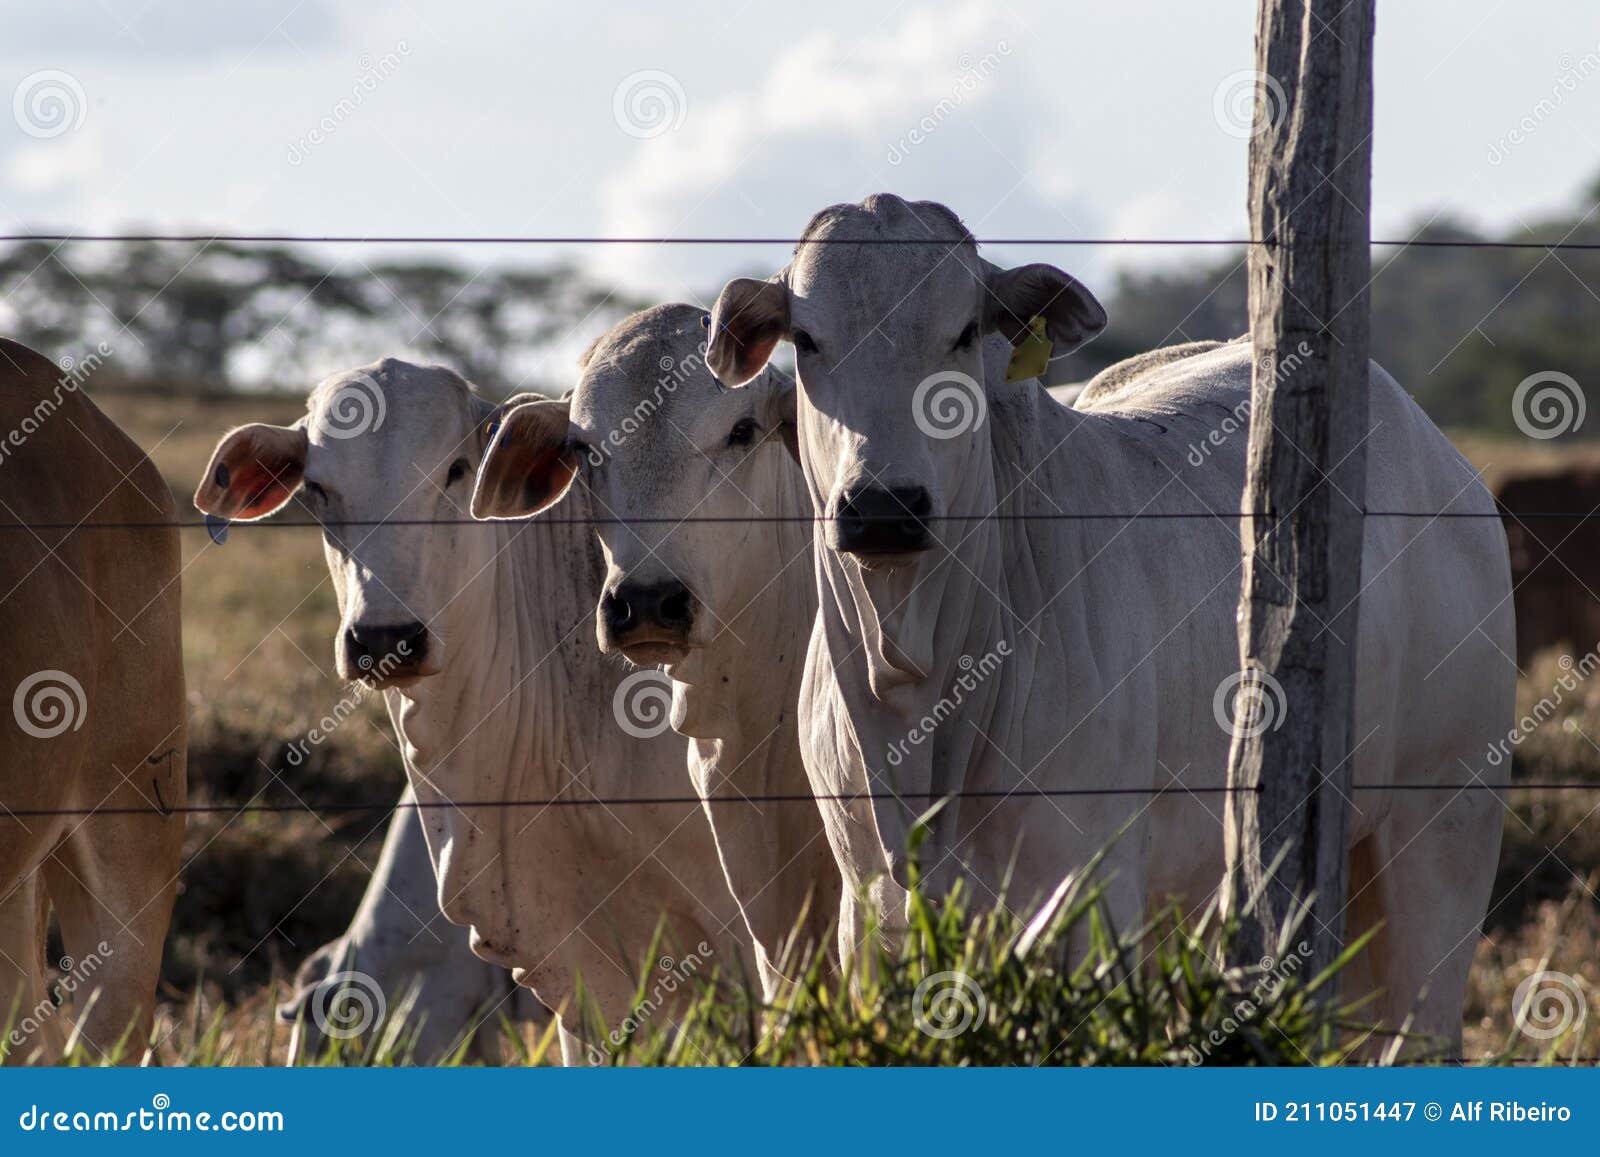 nellore cattle on pasture